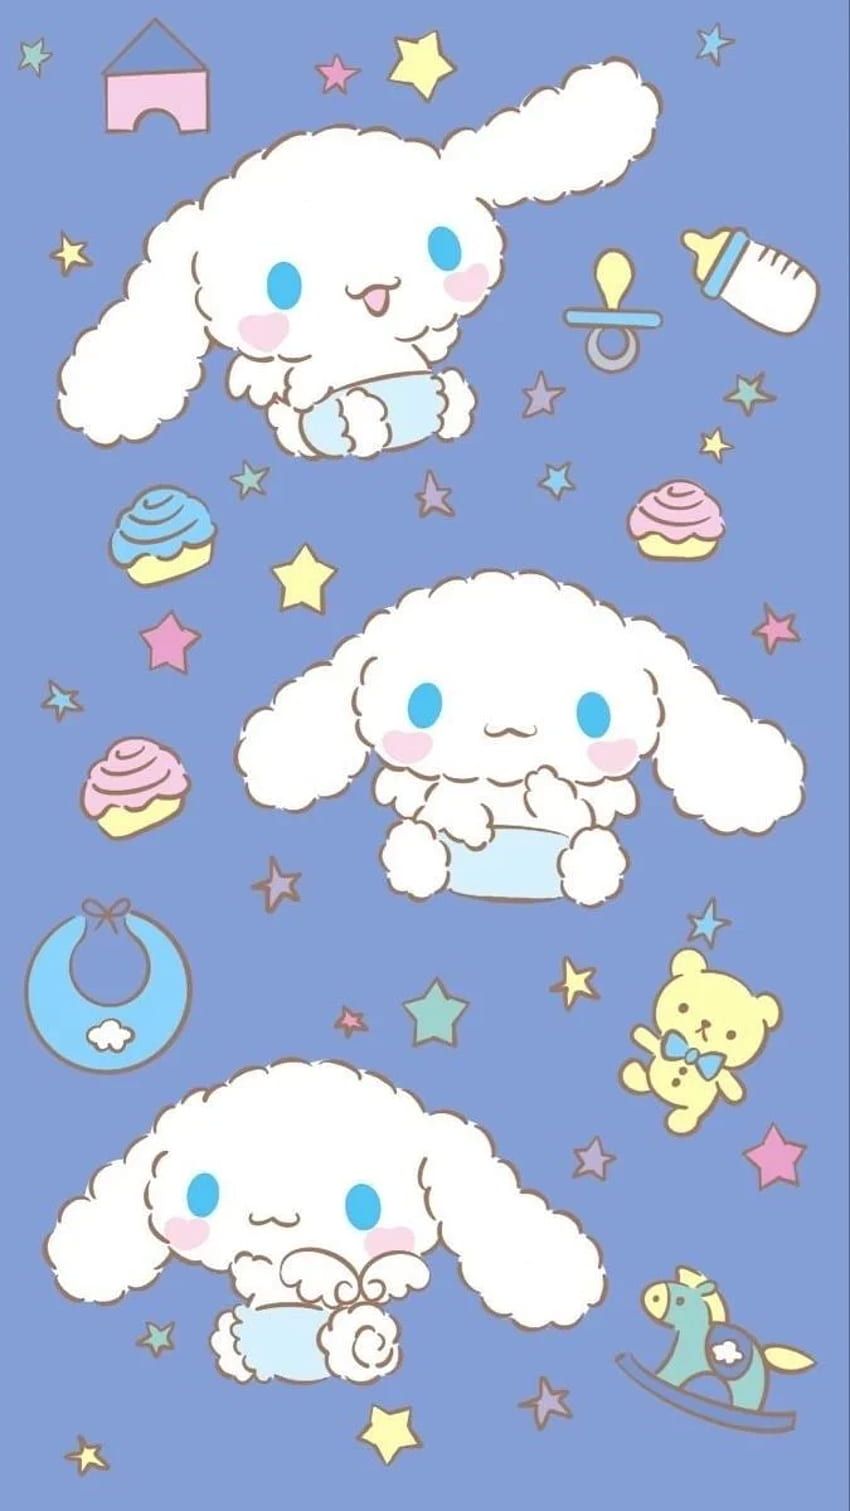 Sanrio Characters wallpaper by *Sanrio* - Cinnamoroll